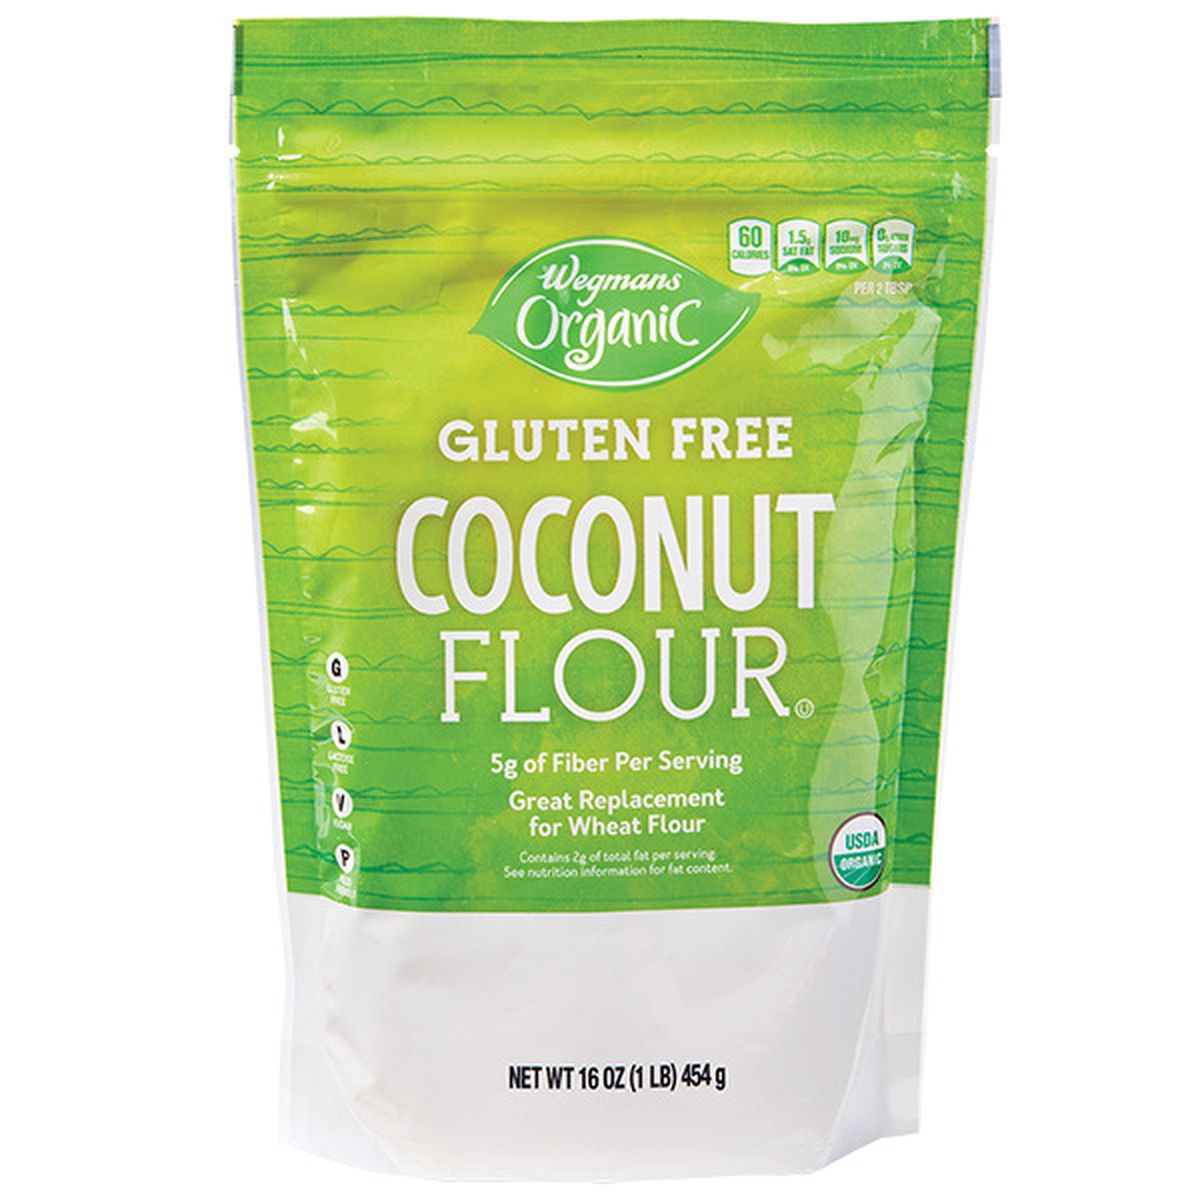 Calories in Wegmans Organic Gluten Free Coconut Flour